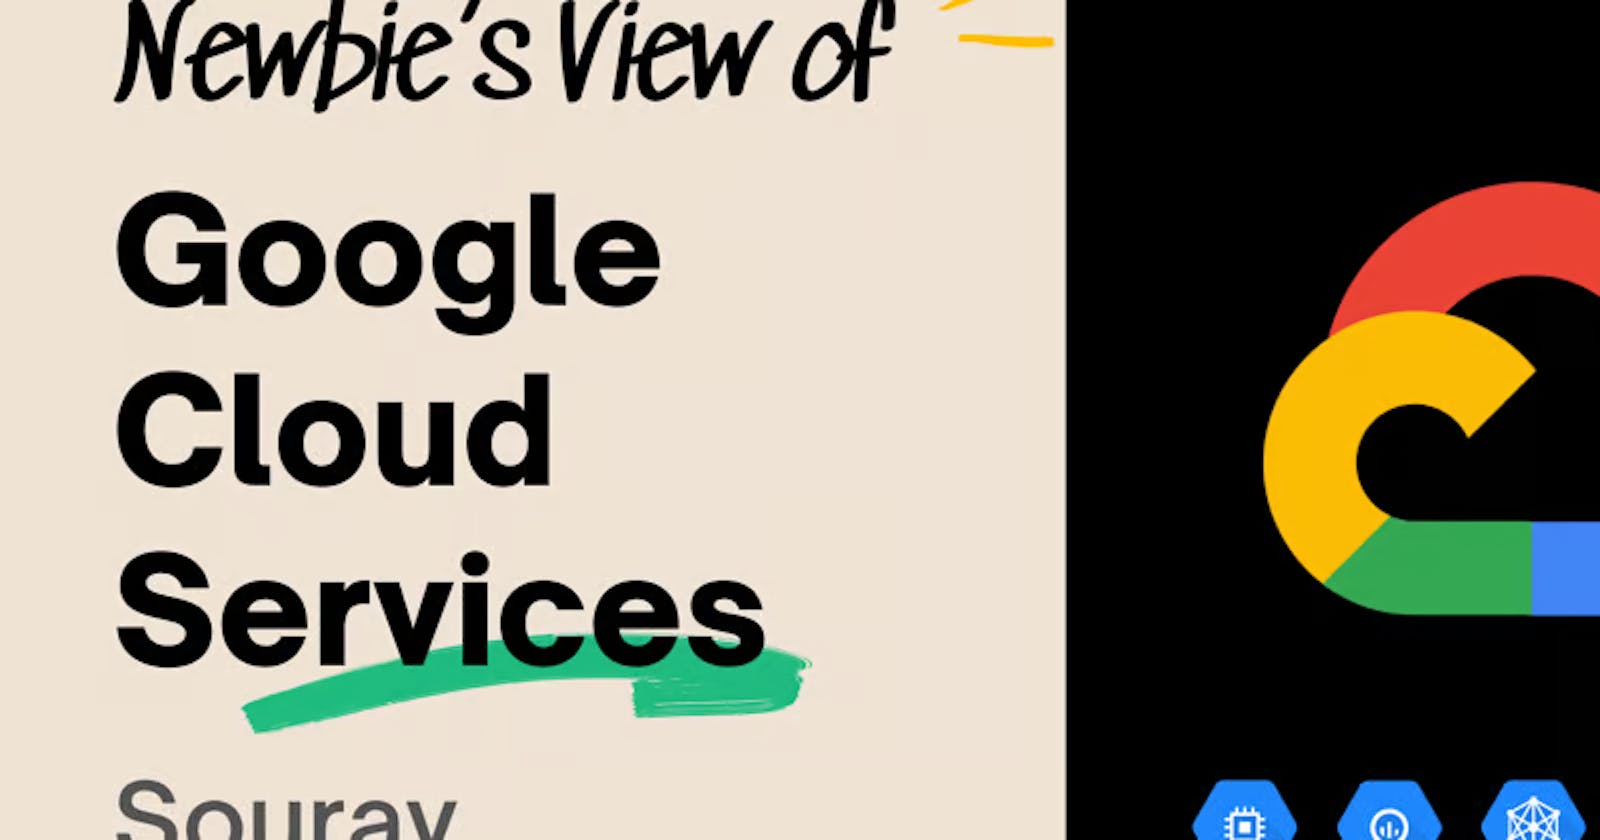 Newbie's View of Google Cloud Services